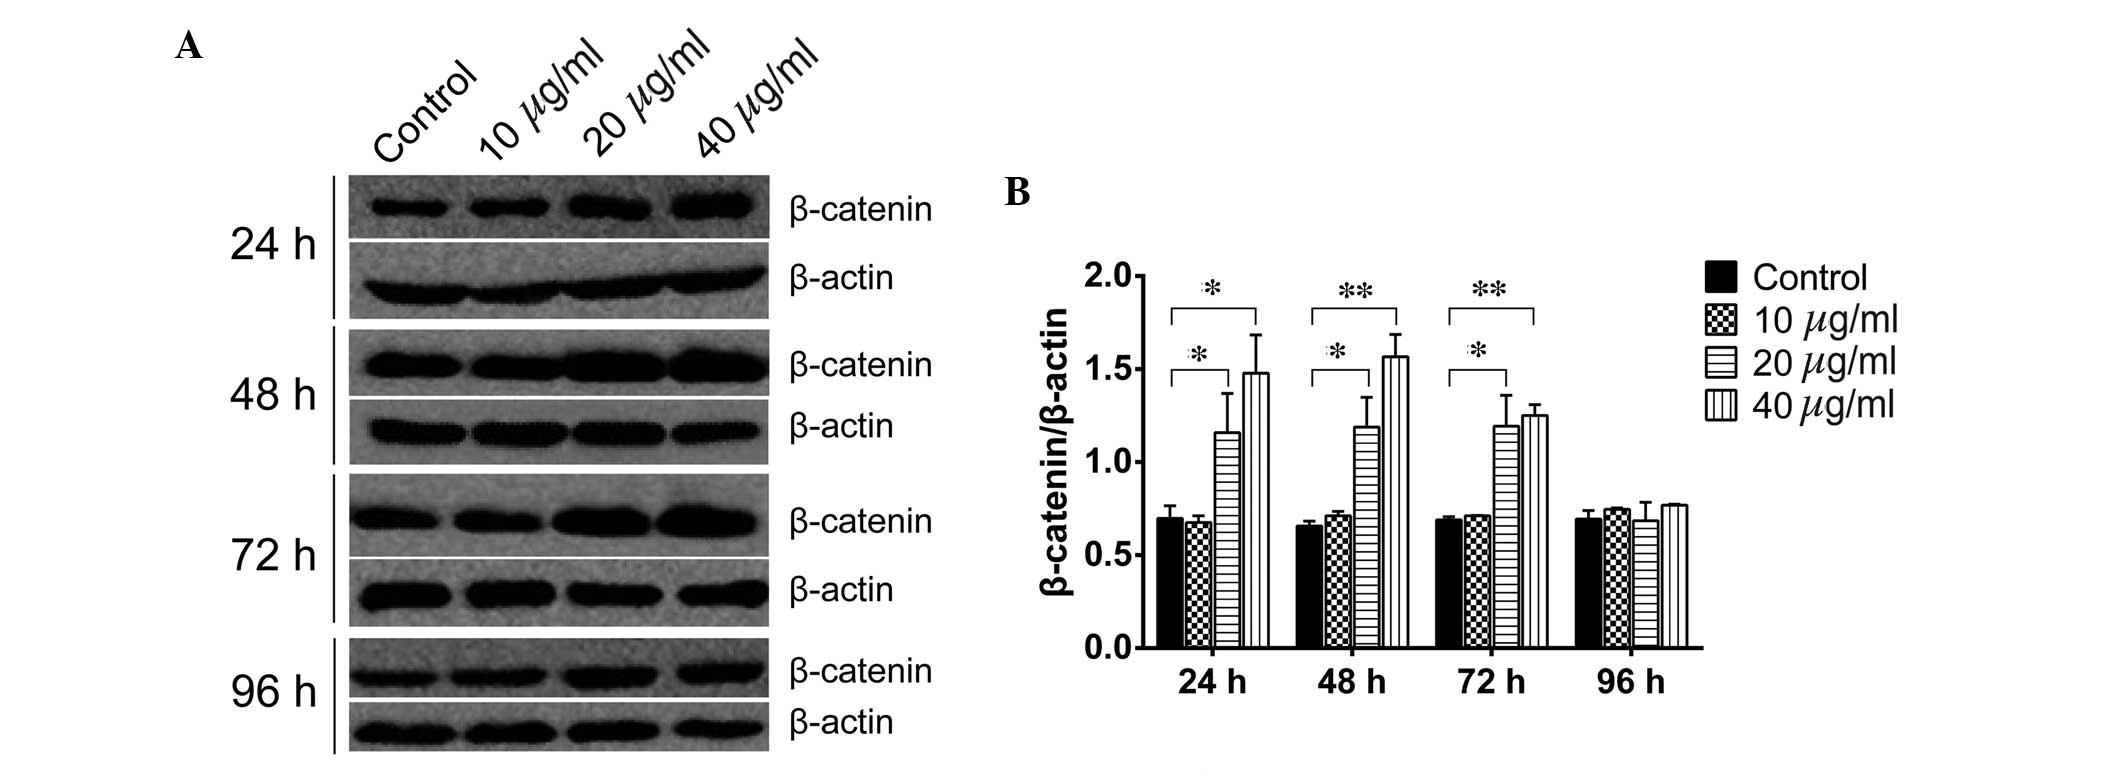 Tanshinone Iia Promotes The Proliferation Of Wb F344 Hepatic Oval Cells Via Wnt B Catenin Signaling